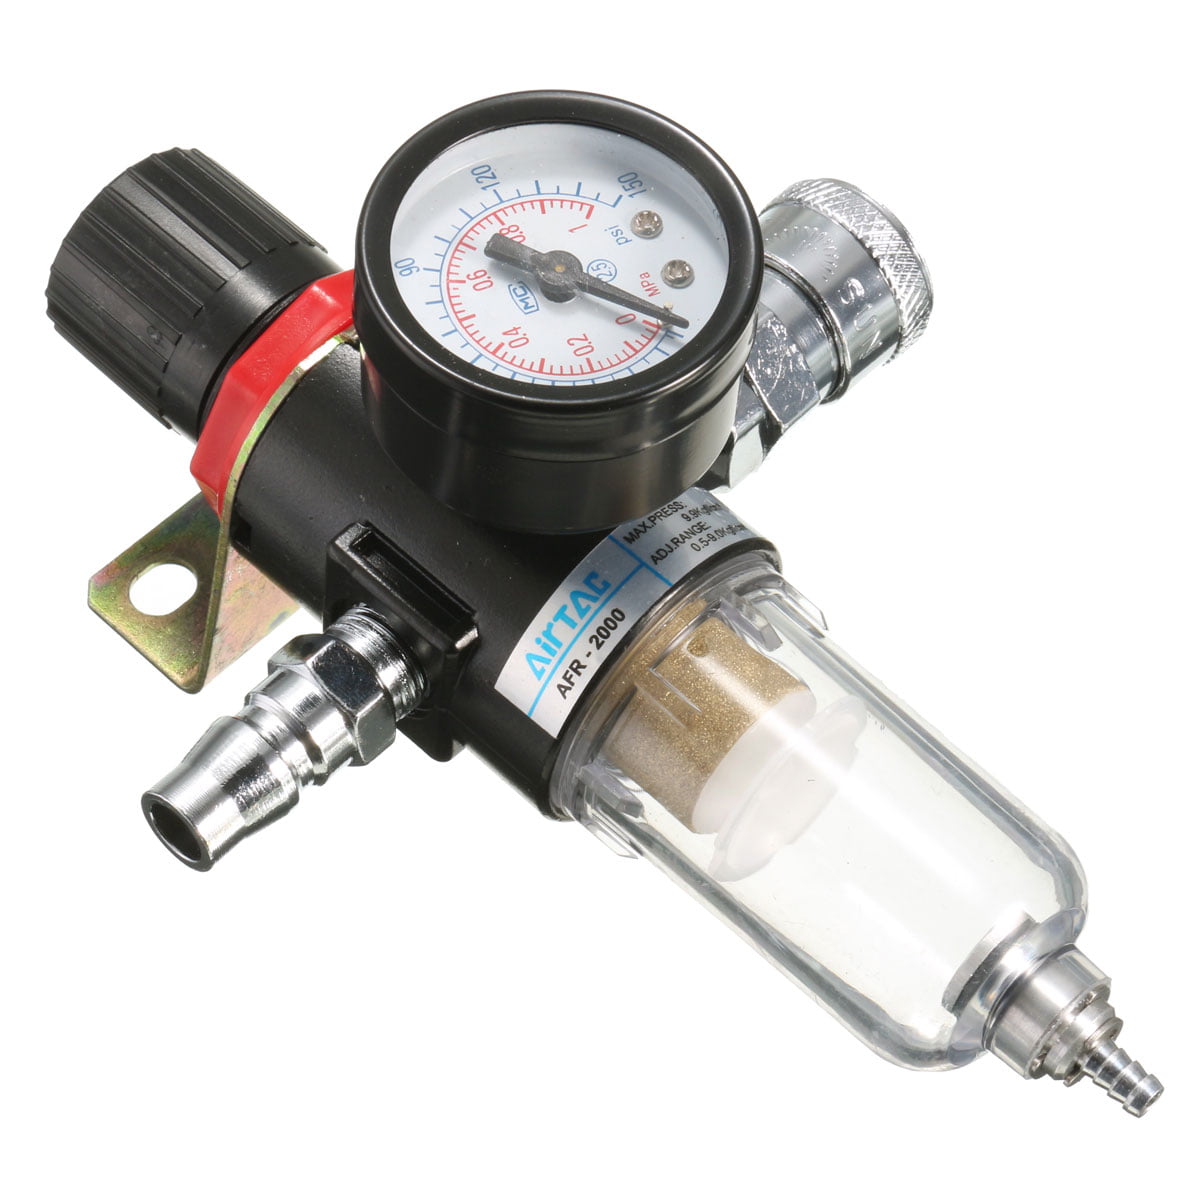 Air Compressor Filter Regulator Moisture Water Trap Oil-Water Separator 750L/Min 